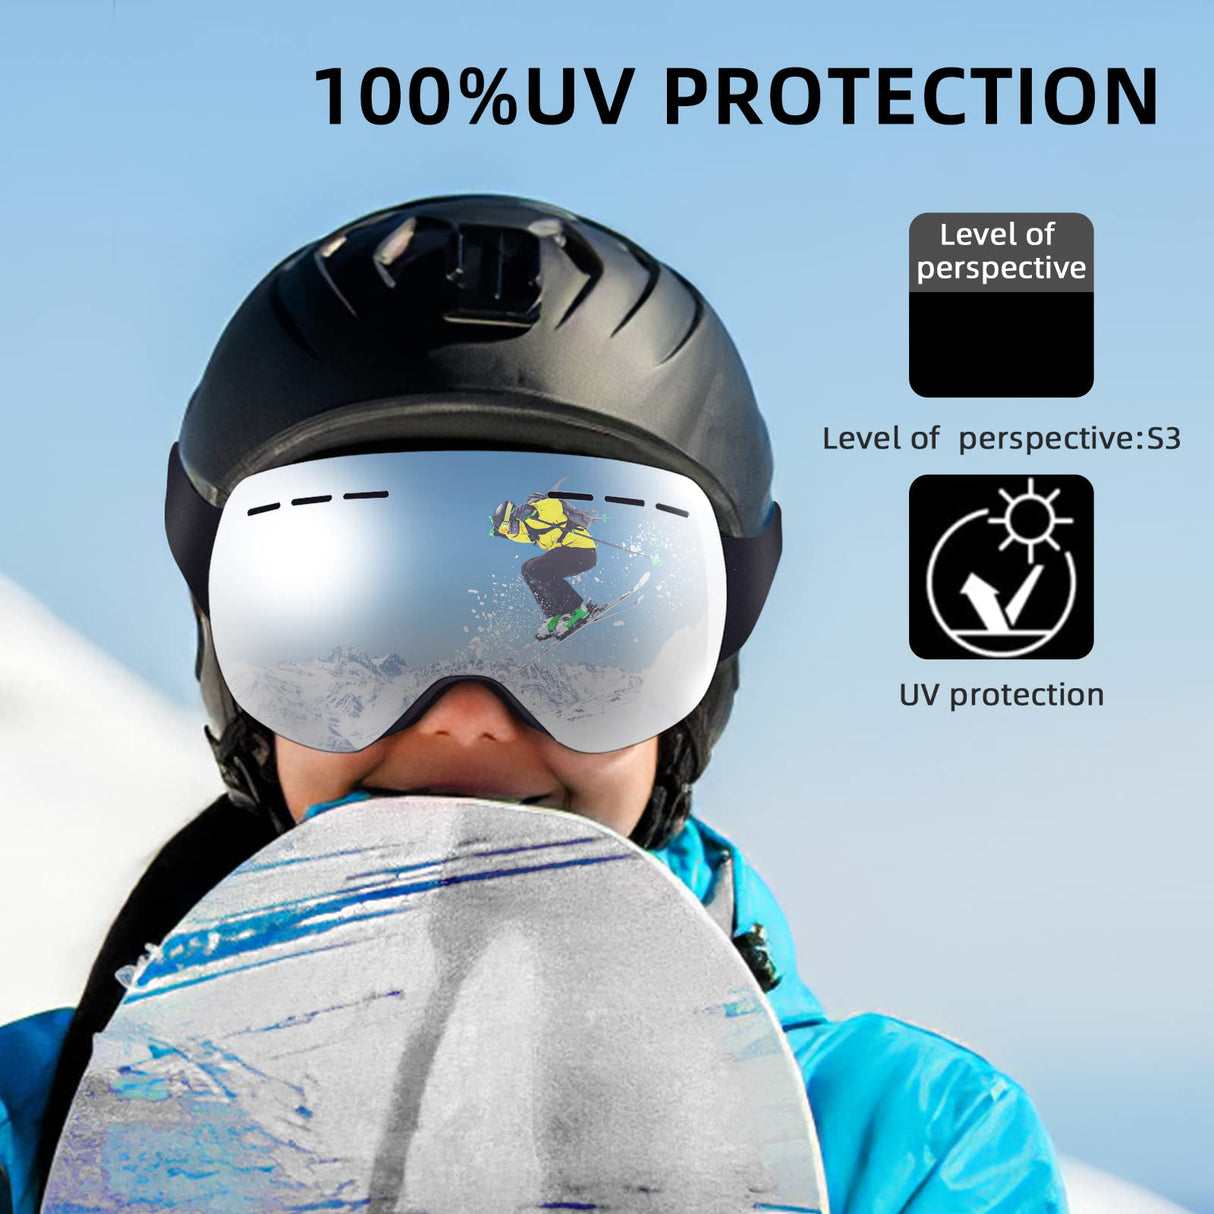 olalunule Ski Goggles Snowboard Goggles for Men and Women Anti-UV Anti-FOG Spherical Frameless Double-Layer Lens Polarized Ski Goggles over Glasses